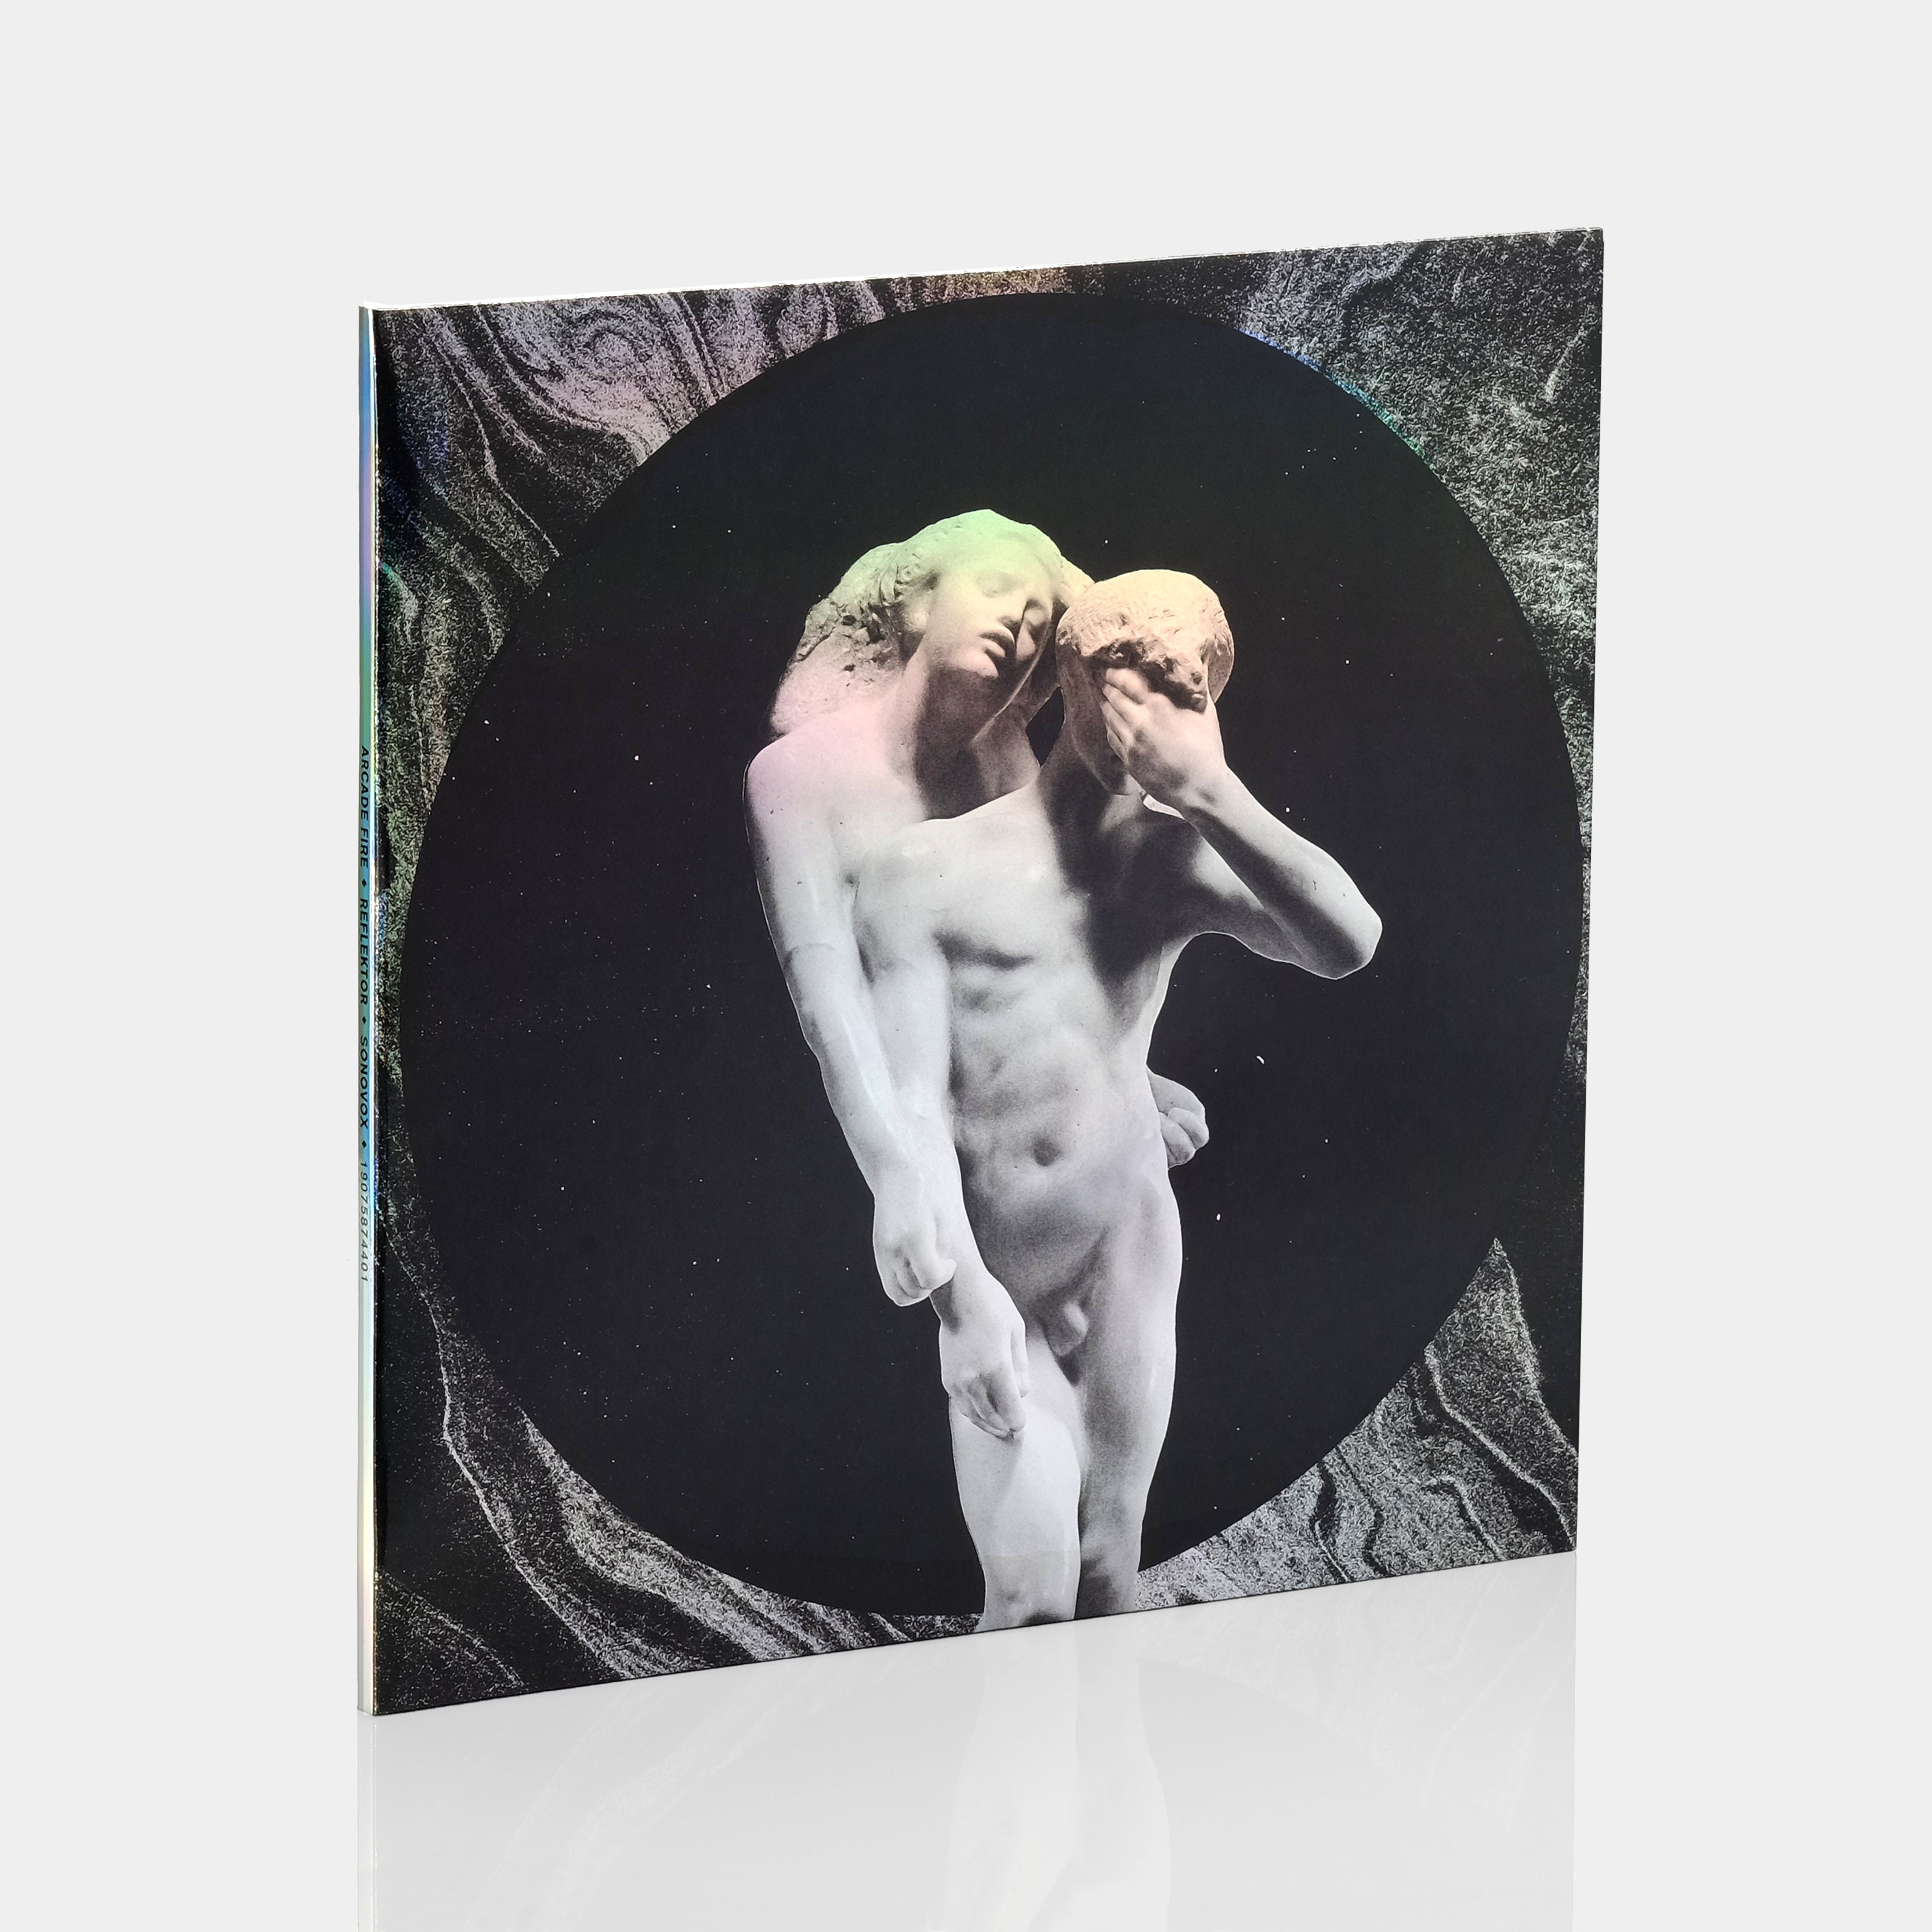 Arcade Fire - Reflektor 2xLP Vinyl Record